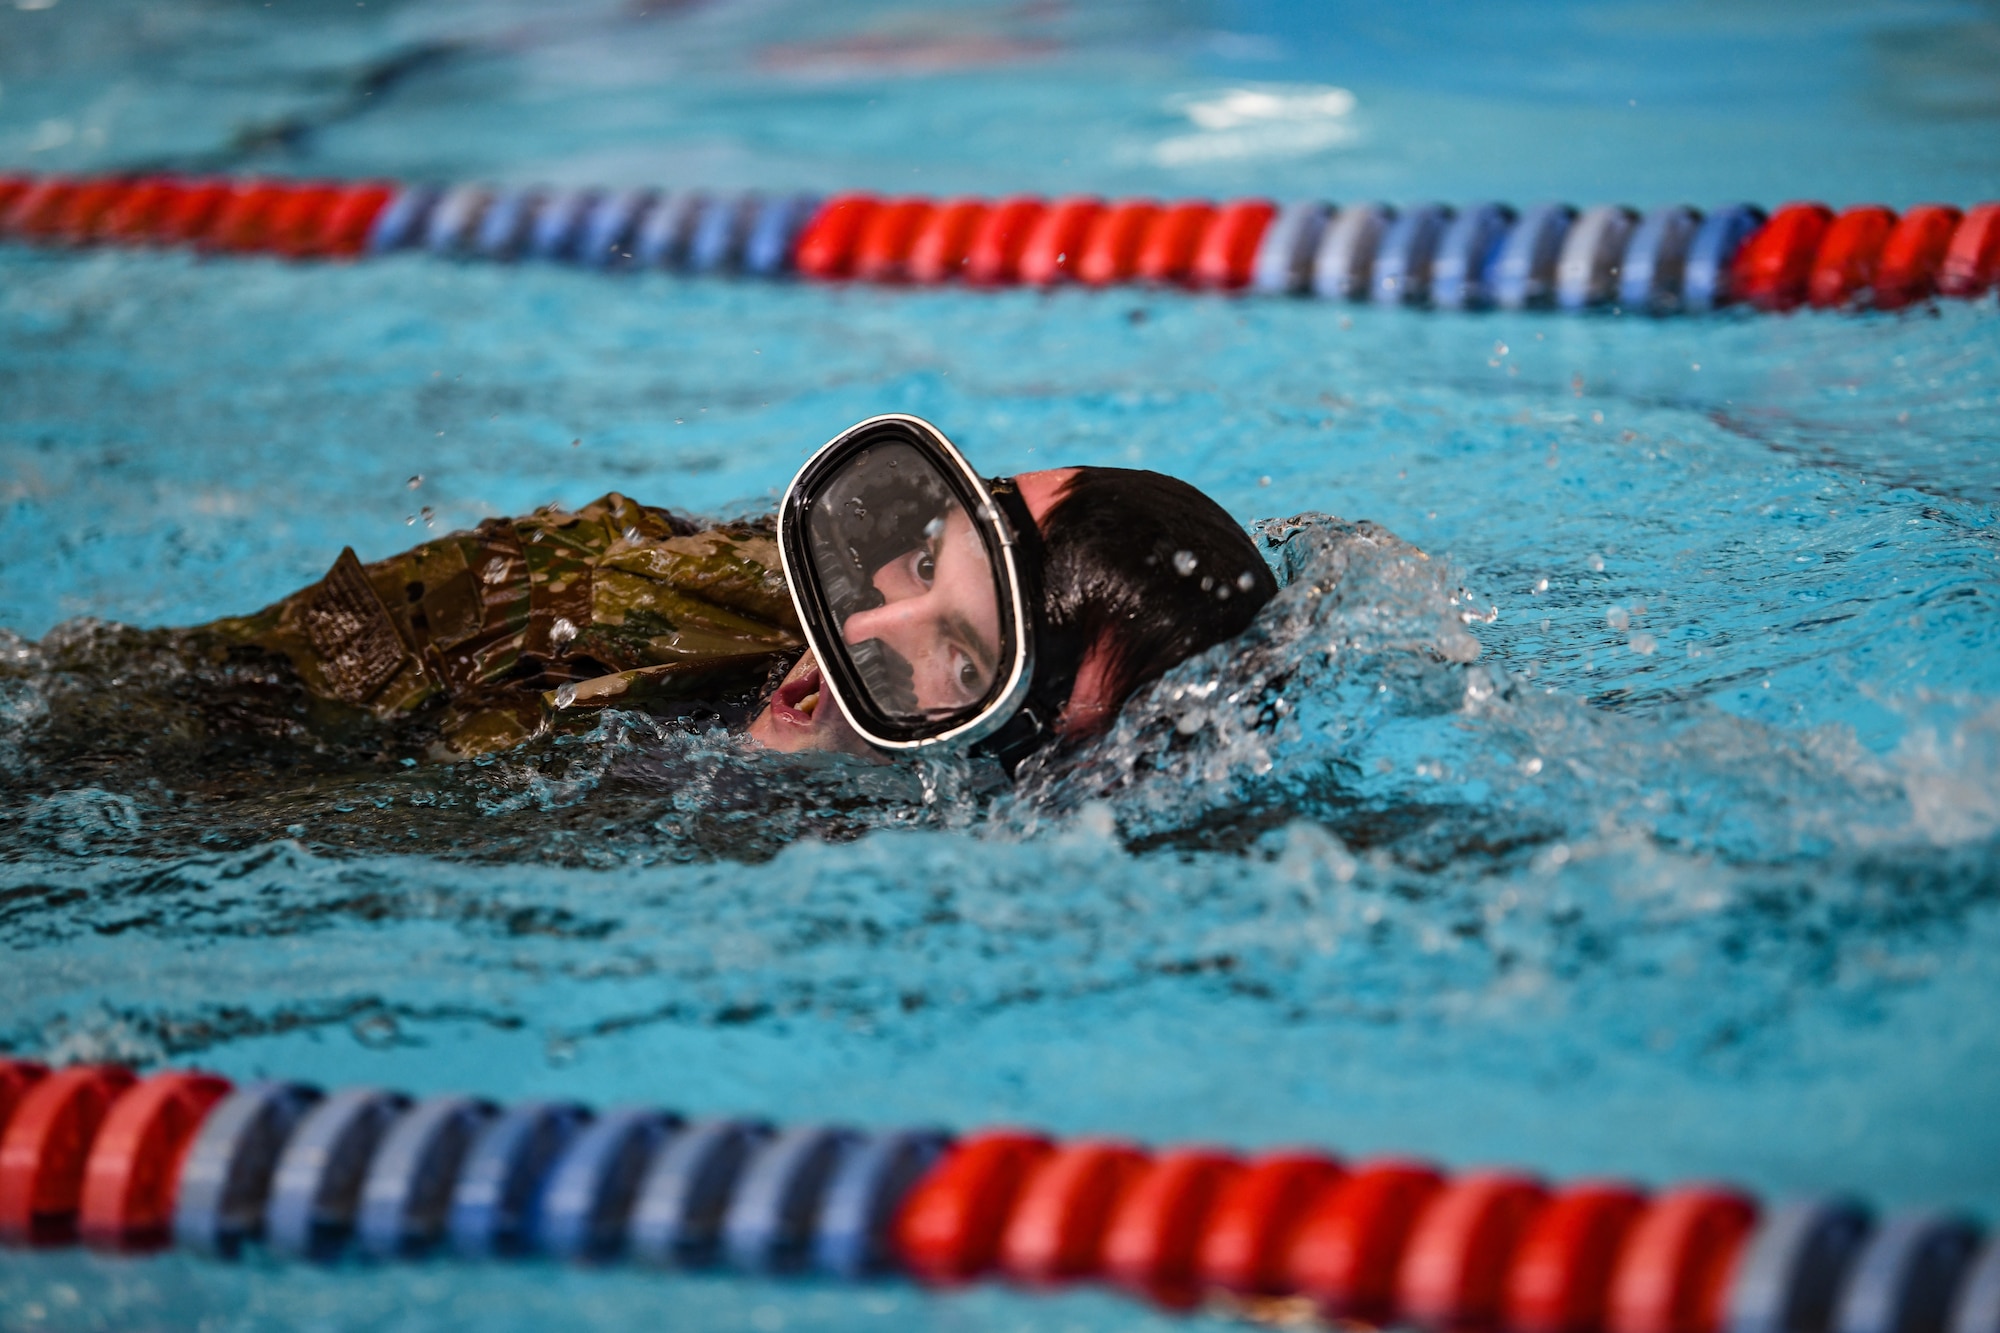 An airman takes a breath as he swims in a pool.